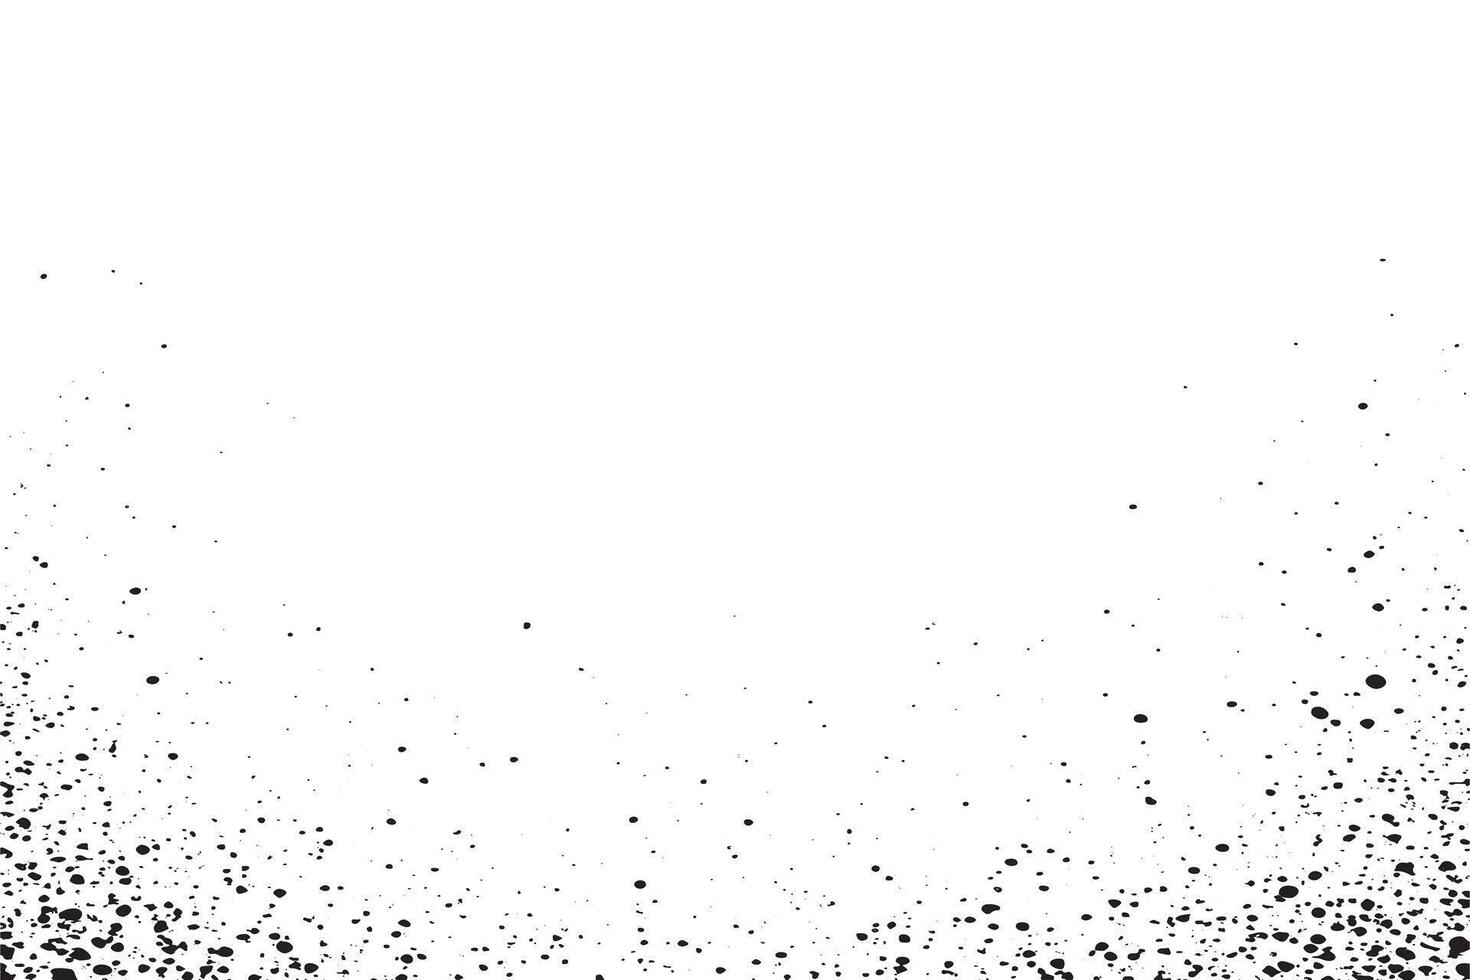 negro y blanco arenoso textura. ilustración antecedentes textura. eps 10 vector